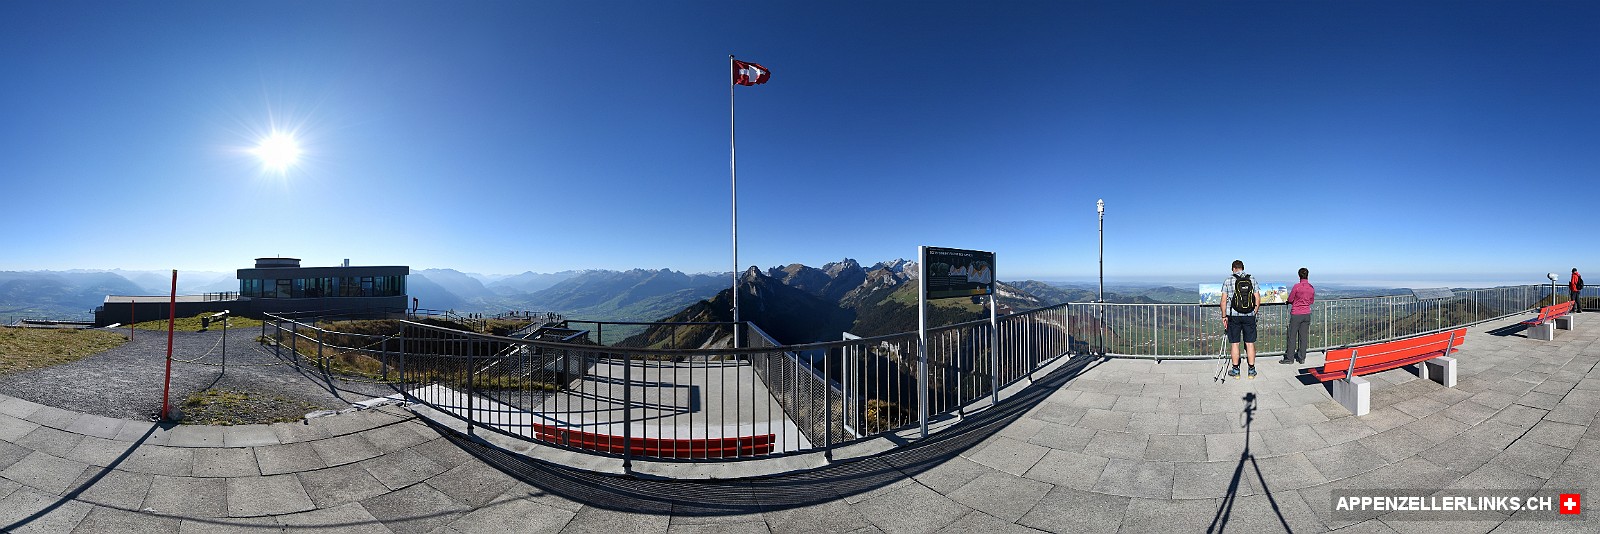 Panorama Hoher Kasten (Gipfel)